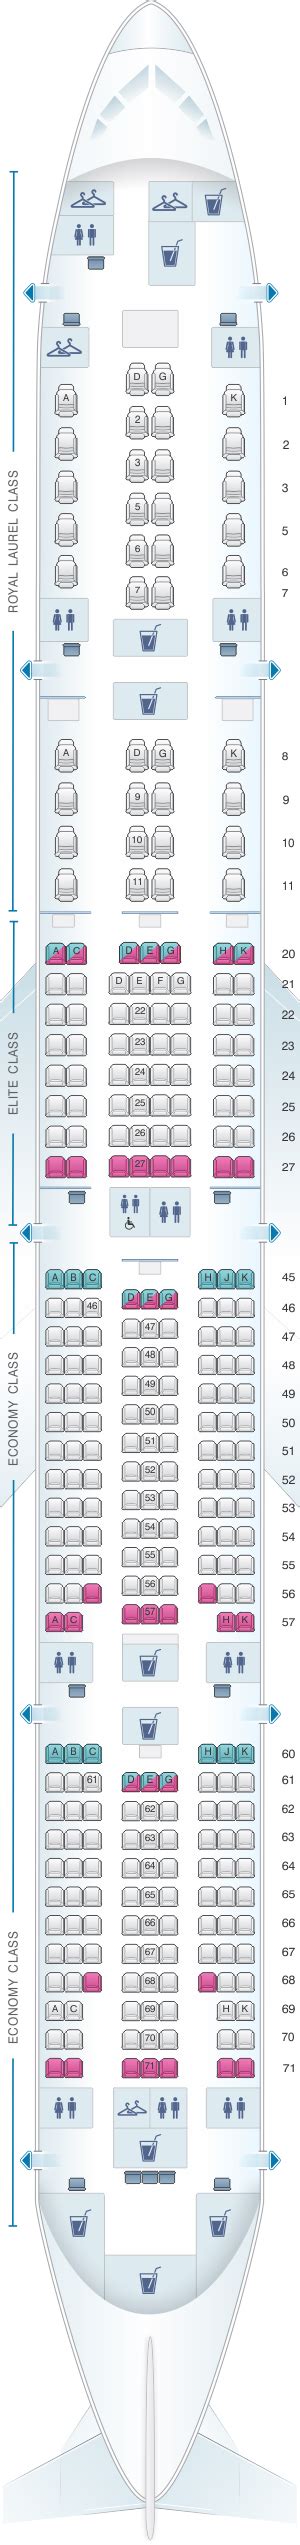 Eva Air Boeing 777 Seat Map